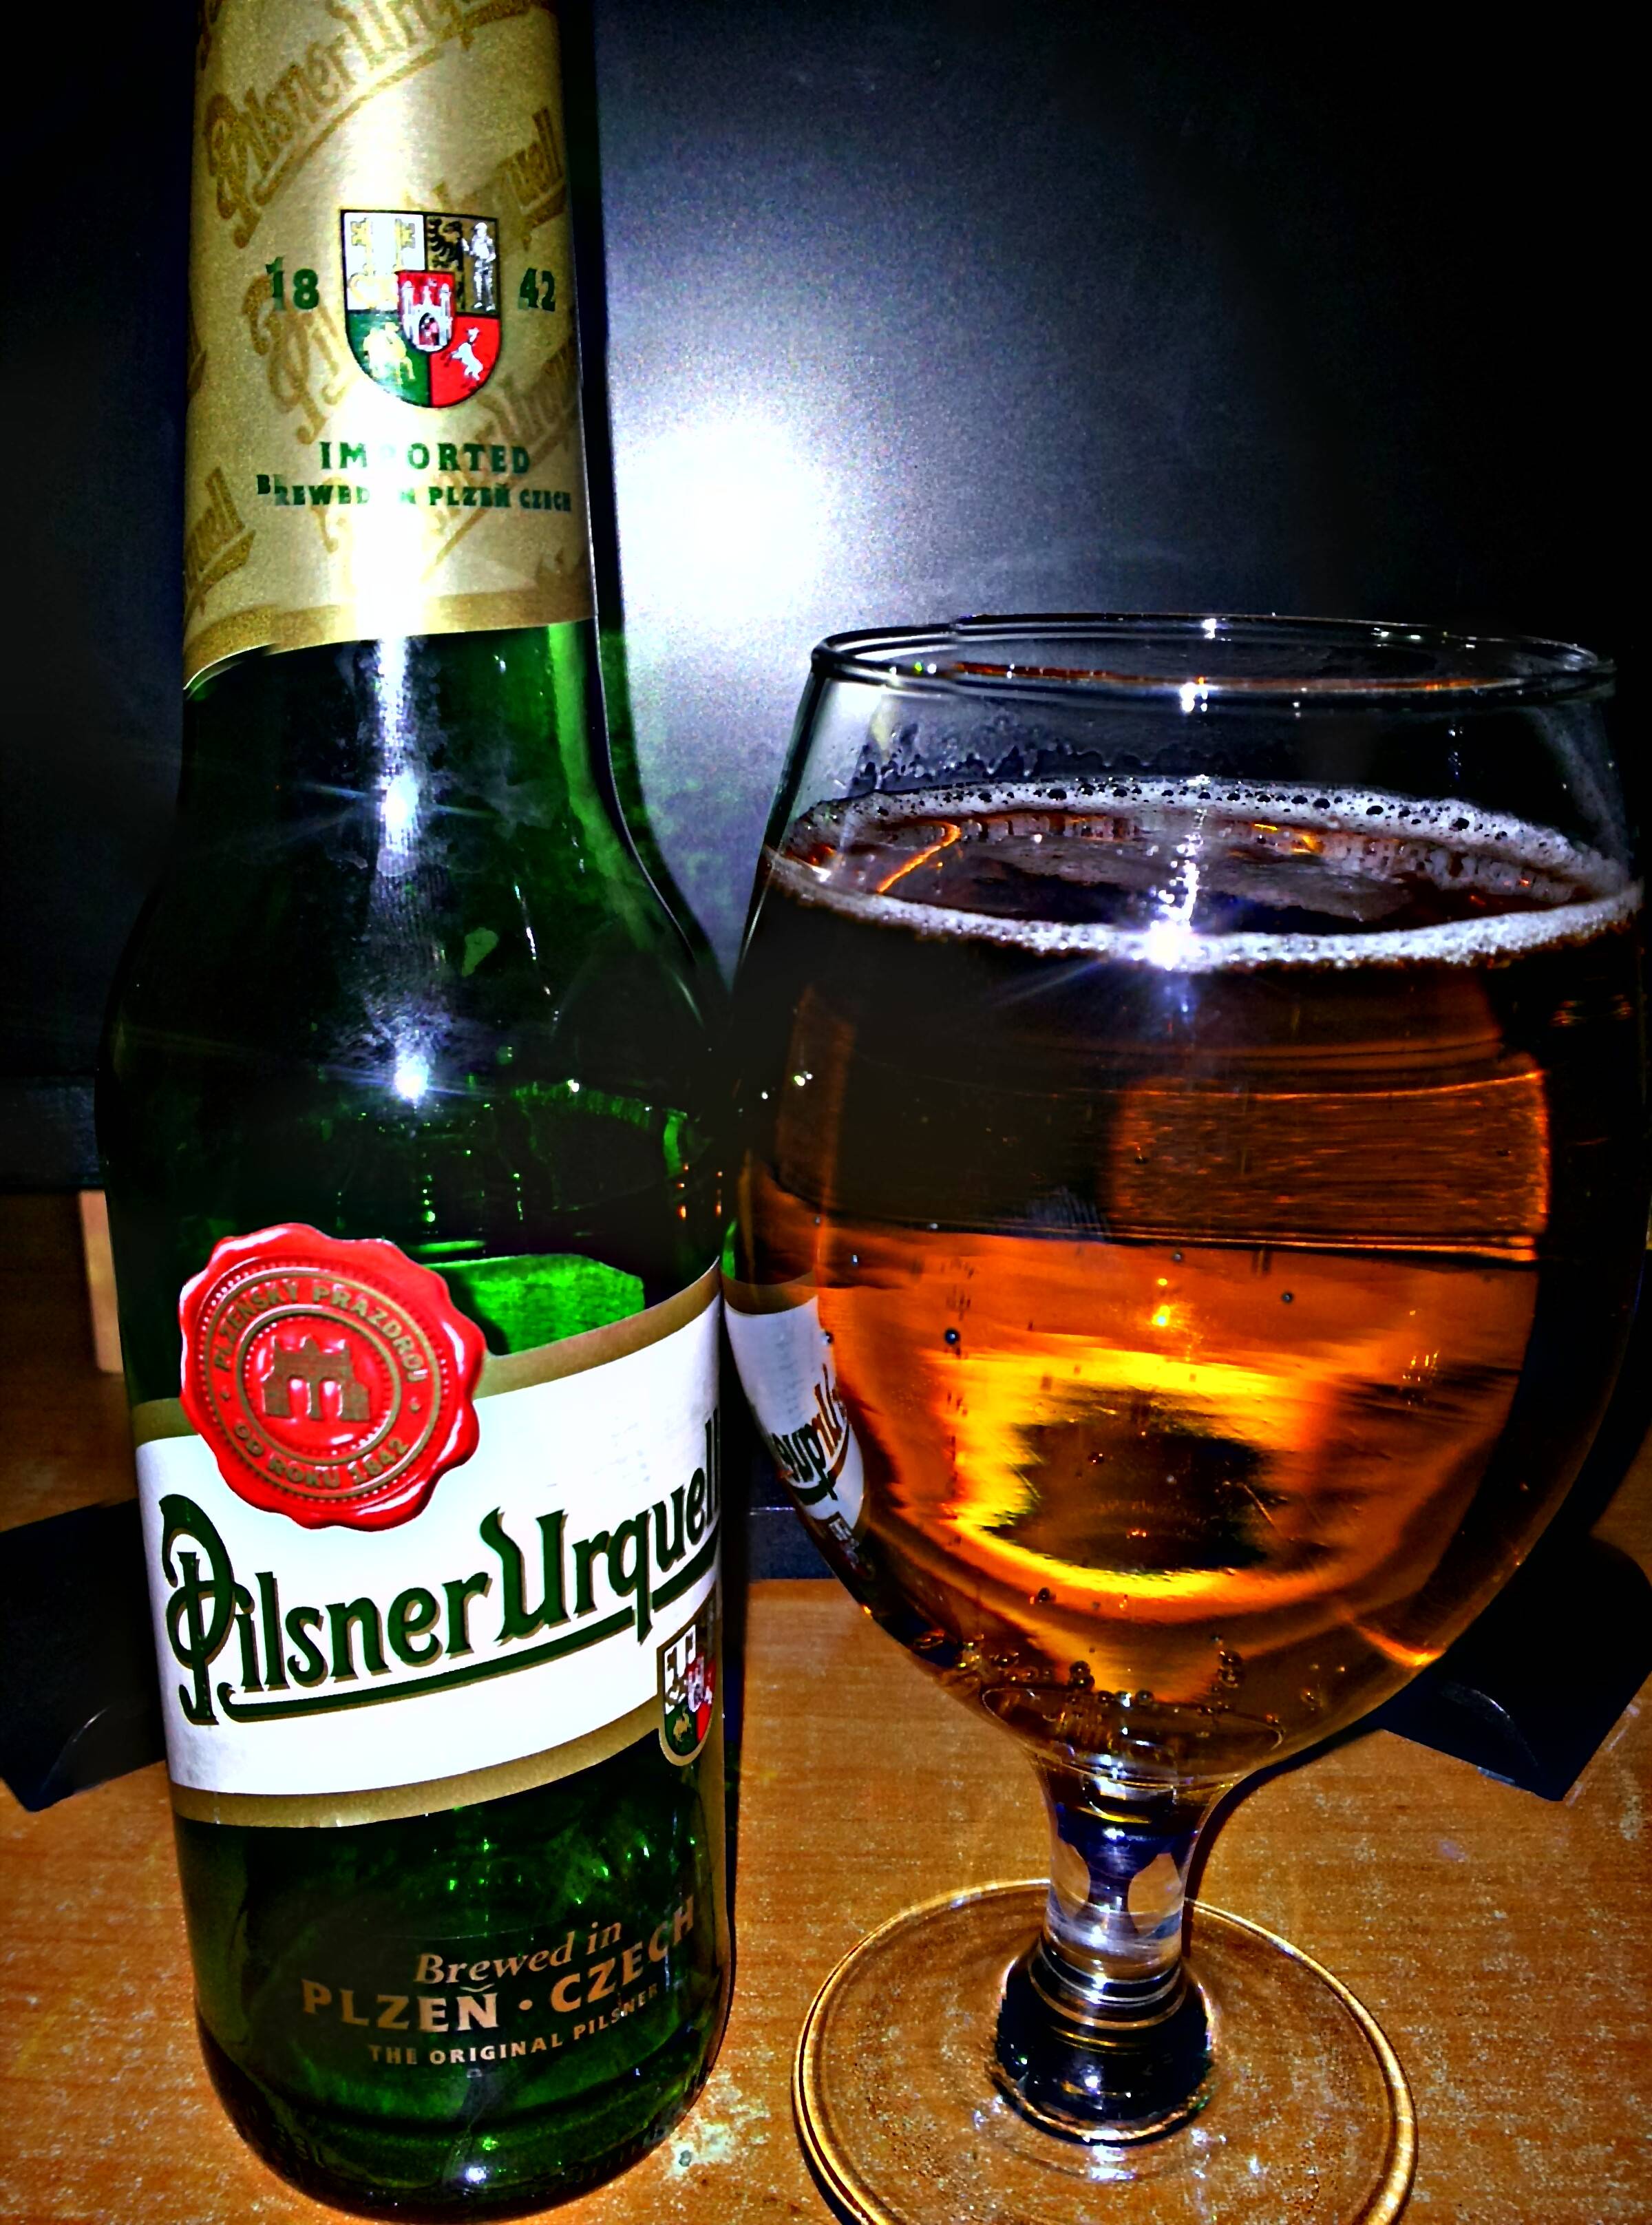 Pilsner Urquell Half Liter Czech Beer Glasses